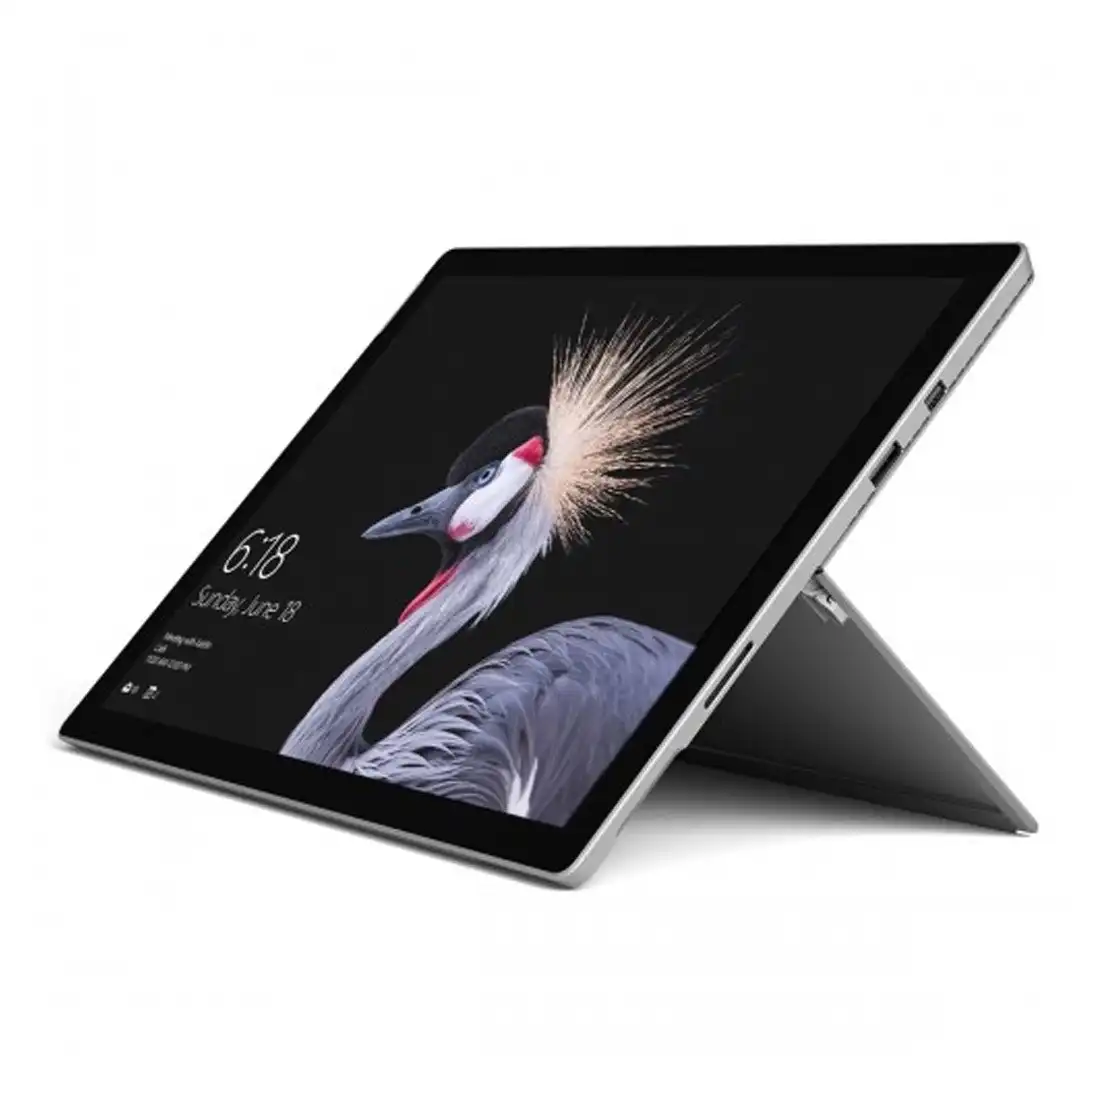 Microsoft Surface Pro (6th Gen) 12.3", i7-8650U, 512GB/16GB Platinum [Refurbished] - As New